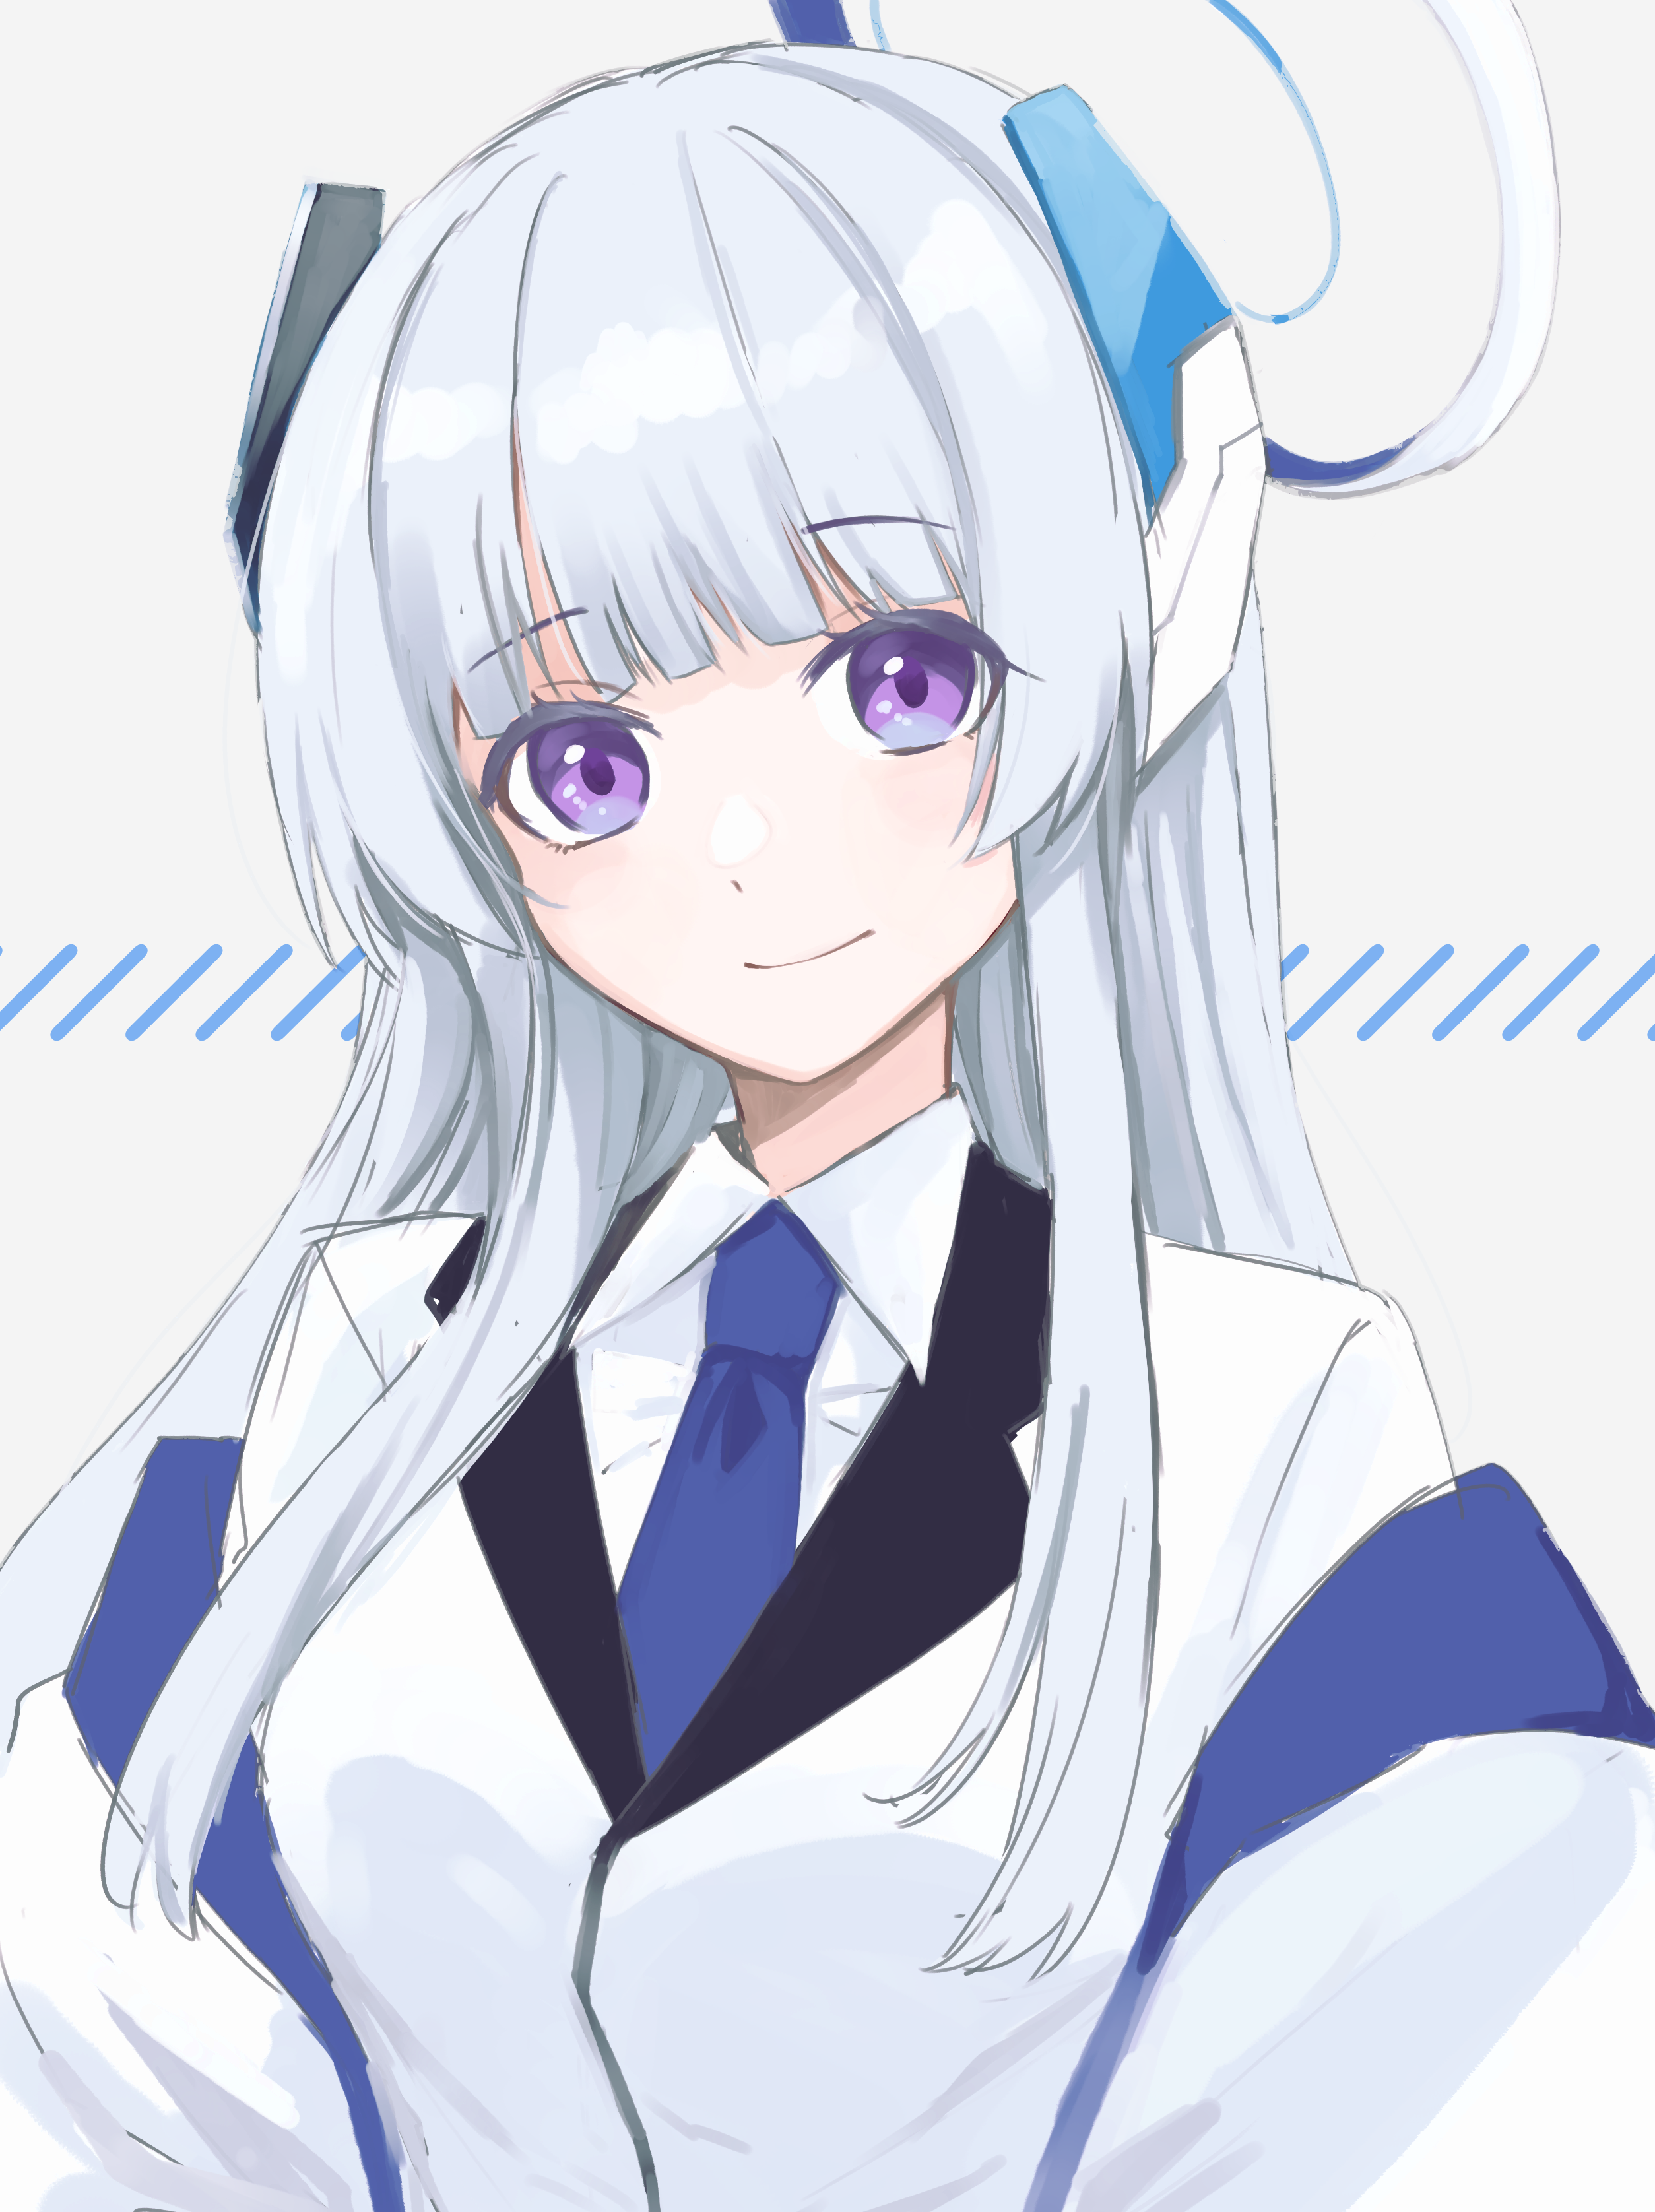 Anime Anime Girls Blue Archive Ushio Noa Long Hair White Hair Solo Artwork Digital Art Fan Art 2508x3352